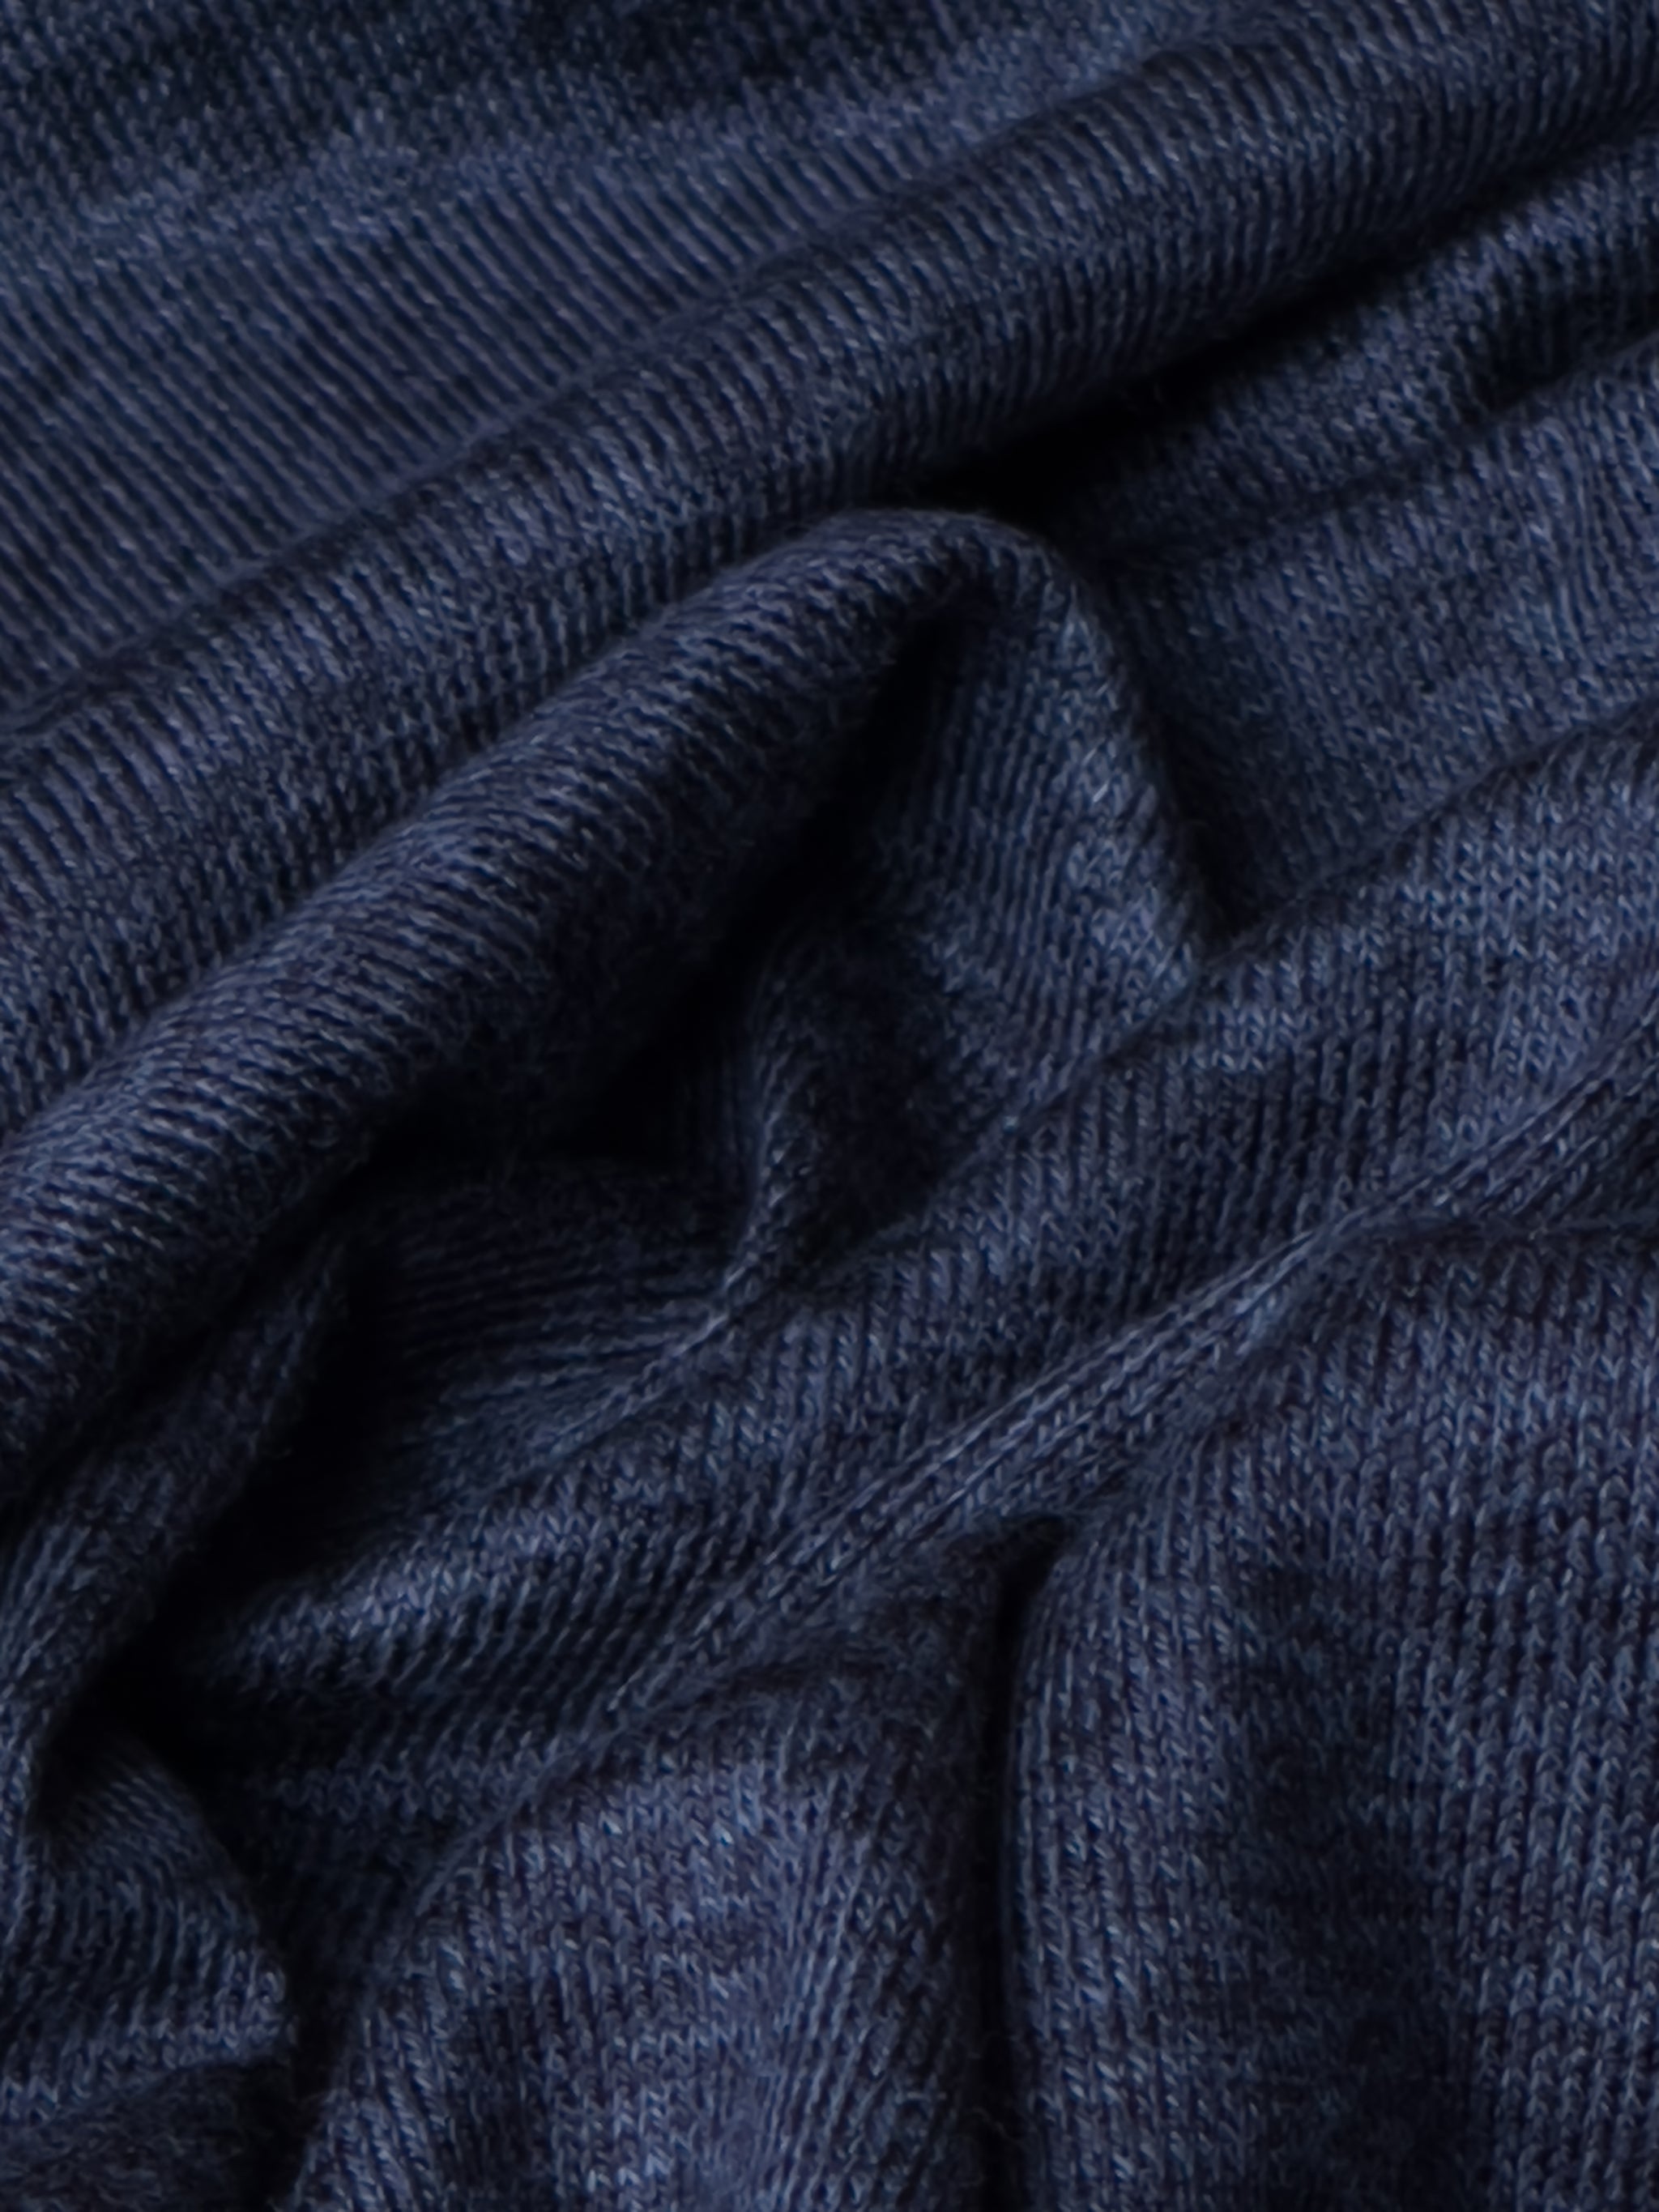 TENCEL™ Lyocell Cotton Modal Sweater Knit - Marine - FitsSewWell